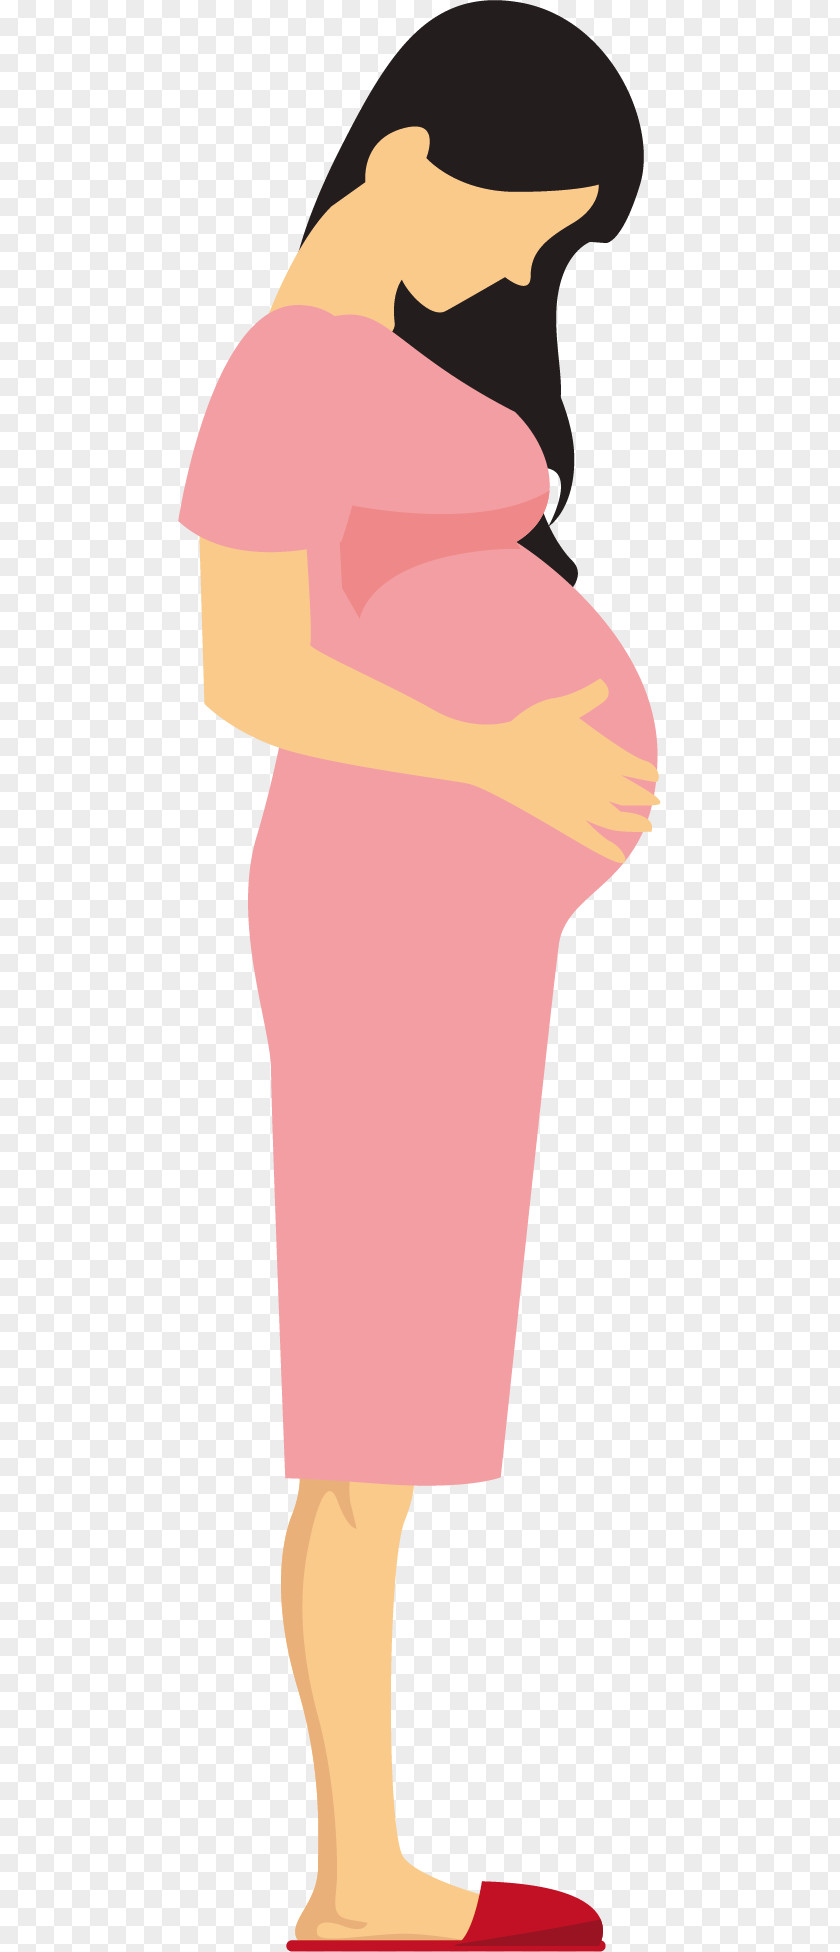 Character Outline Pregnancy Illustration PNG